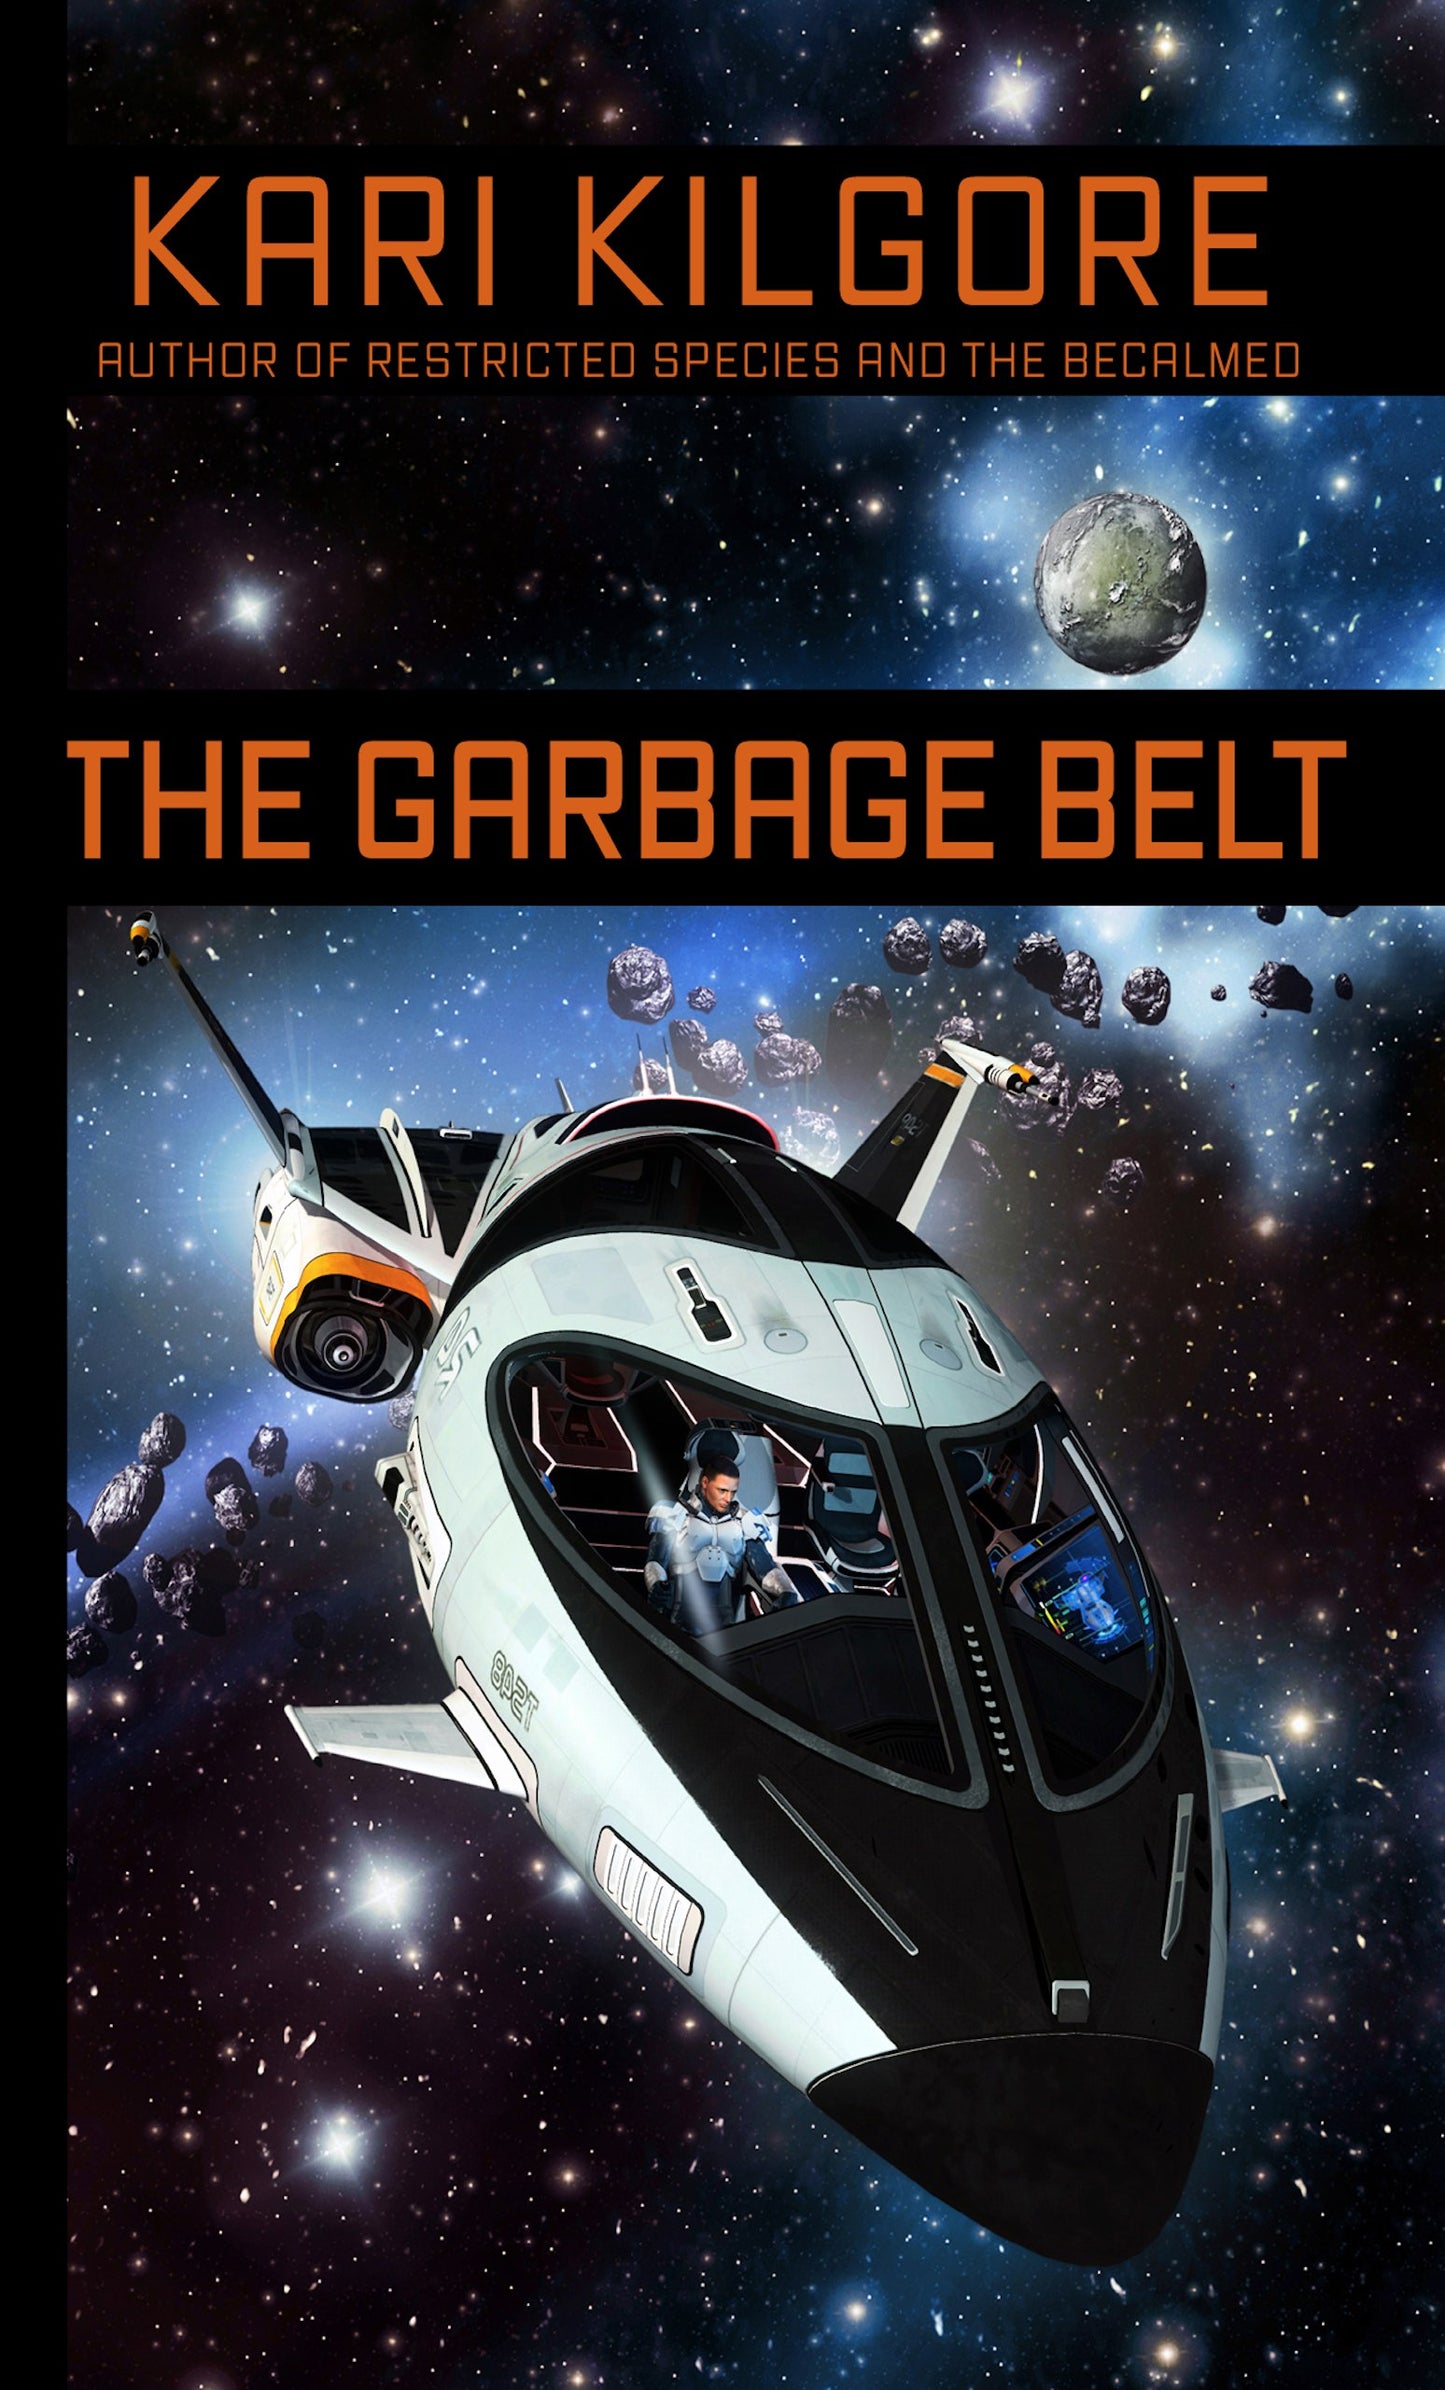 The Garbage Belt